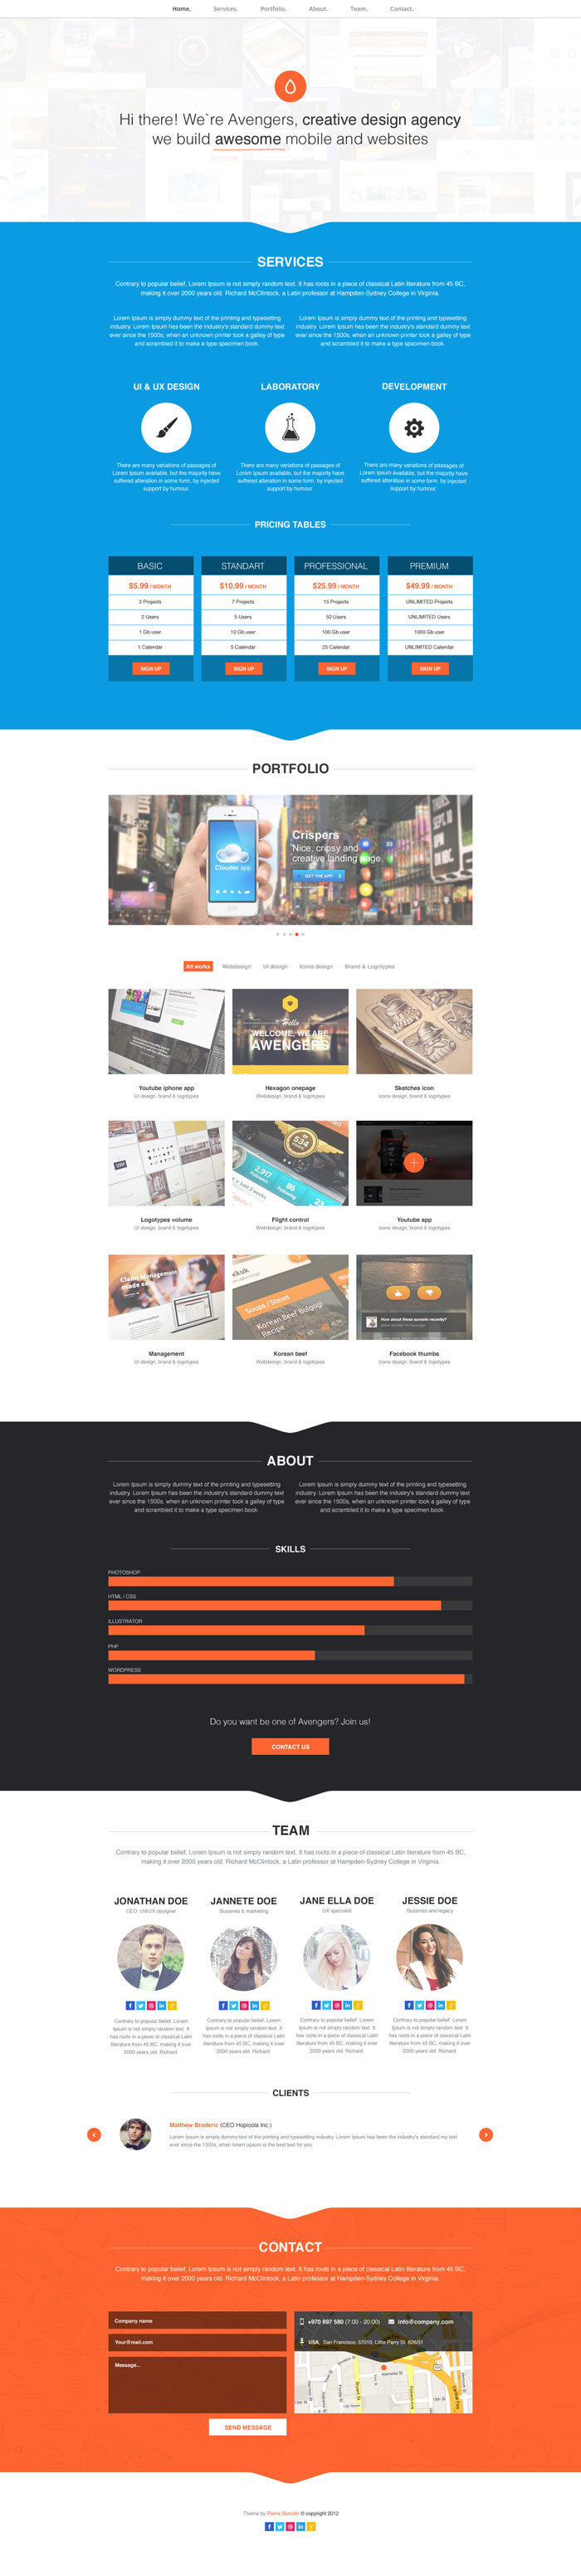 Fresh Onepage portfolio Web Design Inspiration